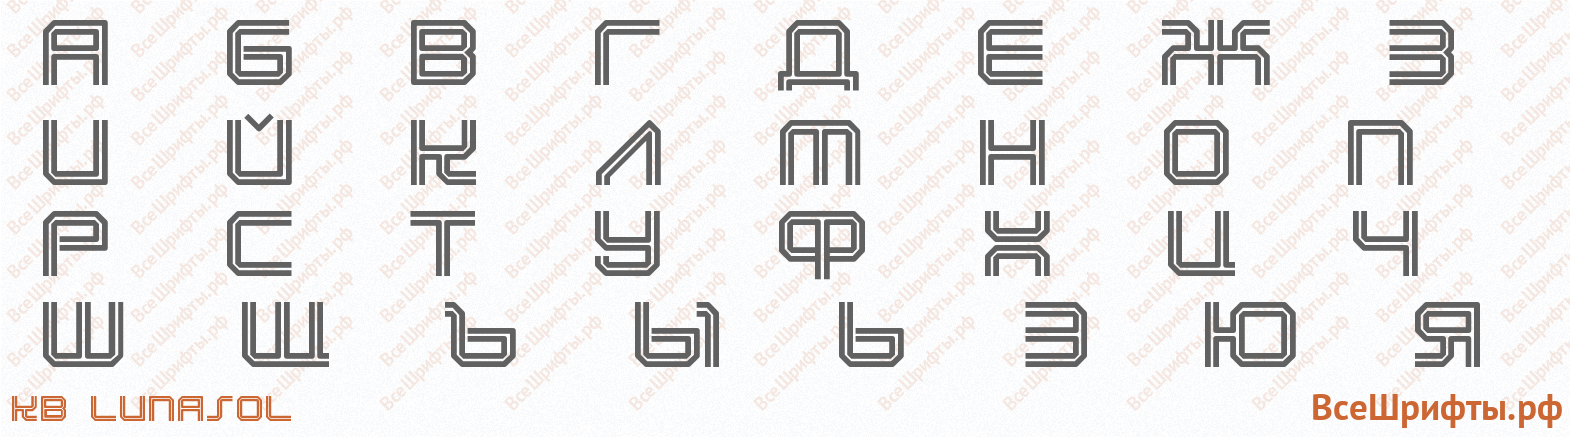 Шрифт KB Lunasol с русскими буквами